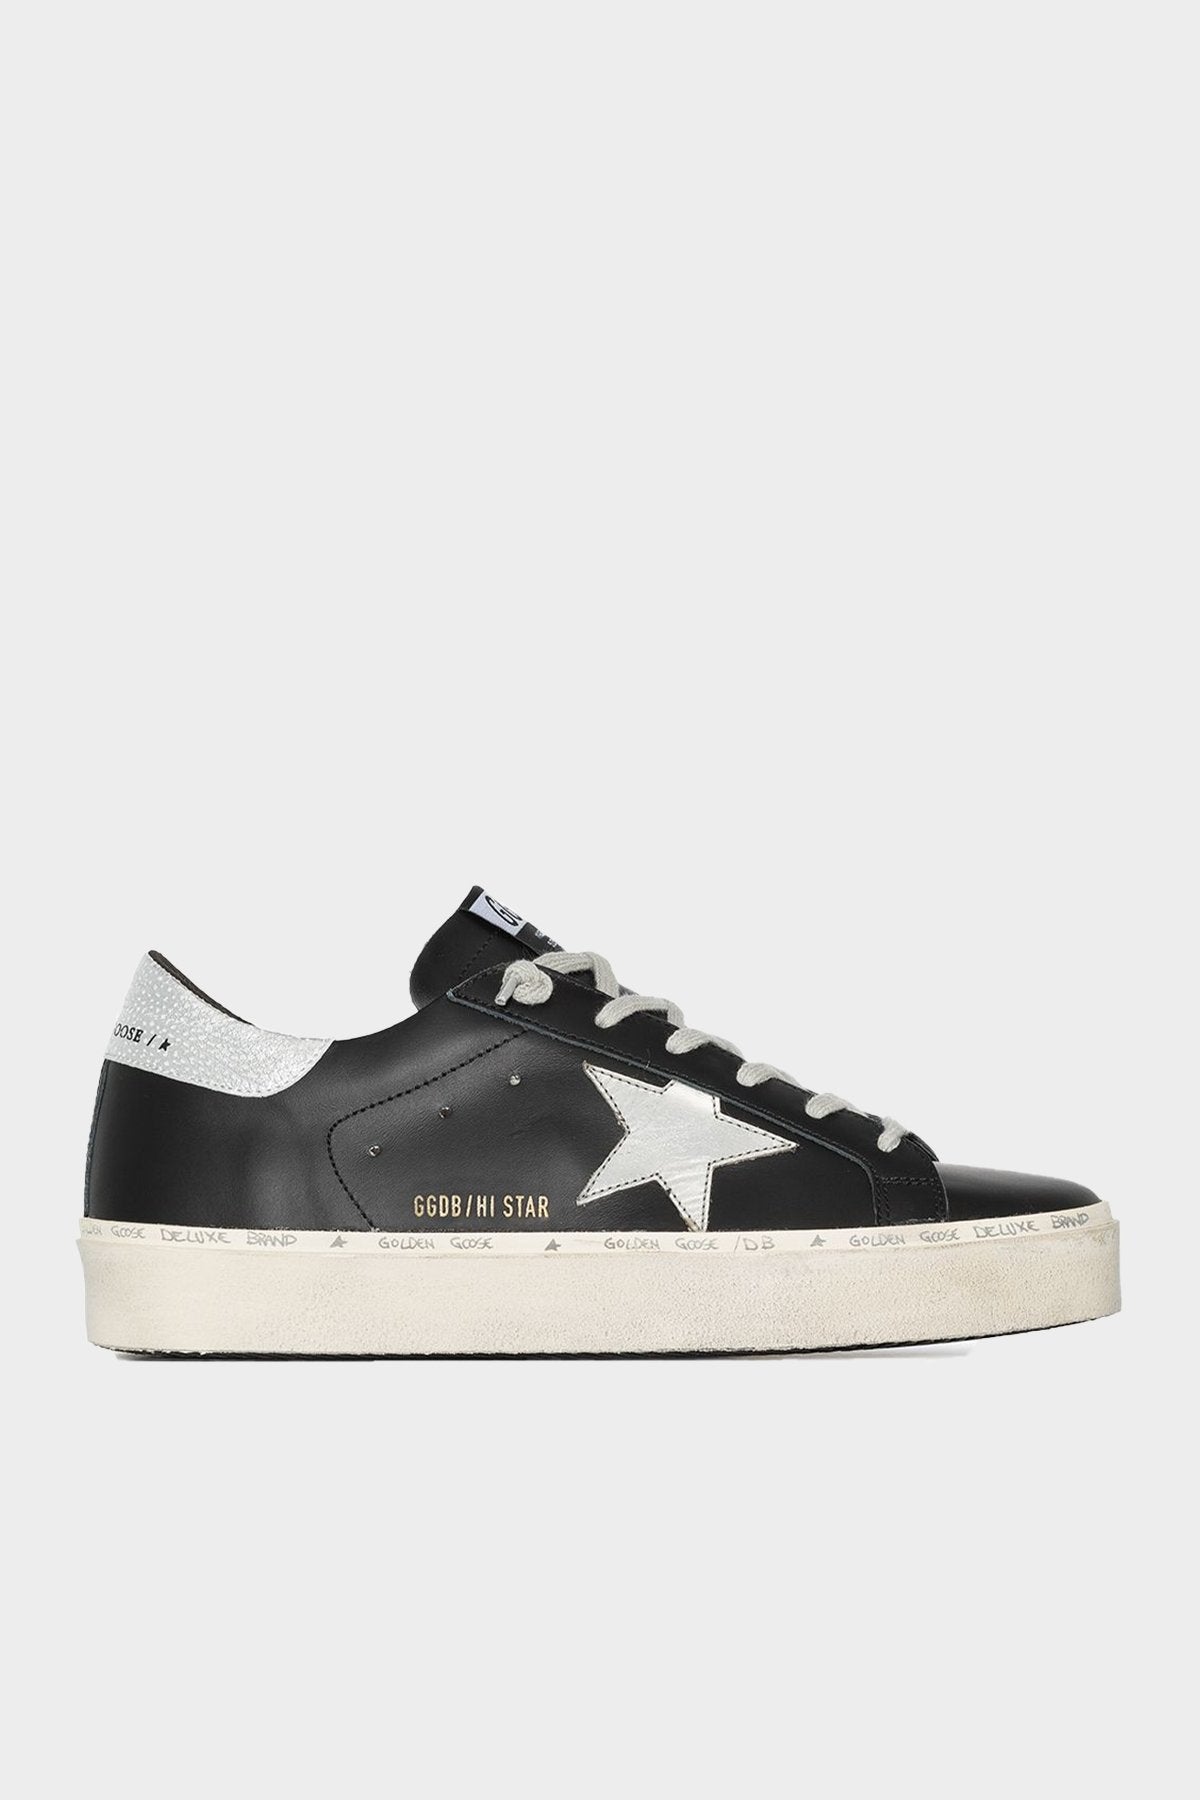 Hi-Star Black Leather Laminated Star Sneaker - shop-olivia.com